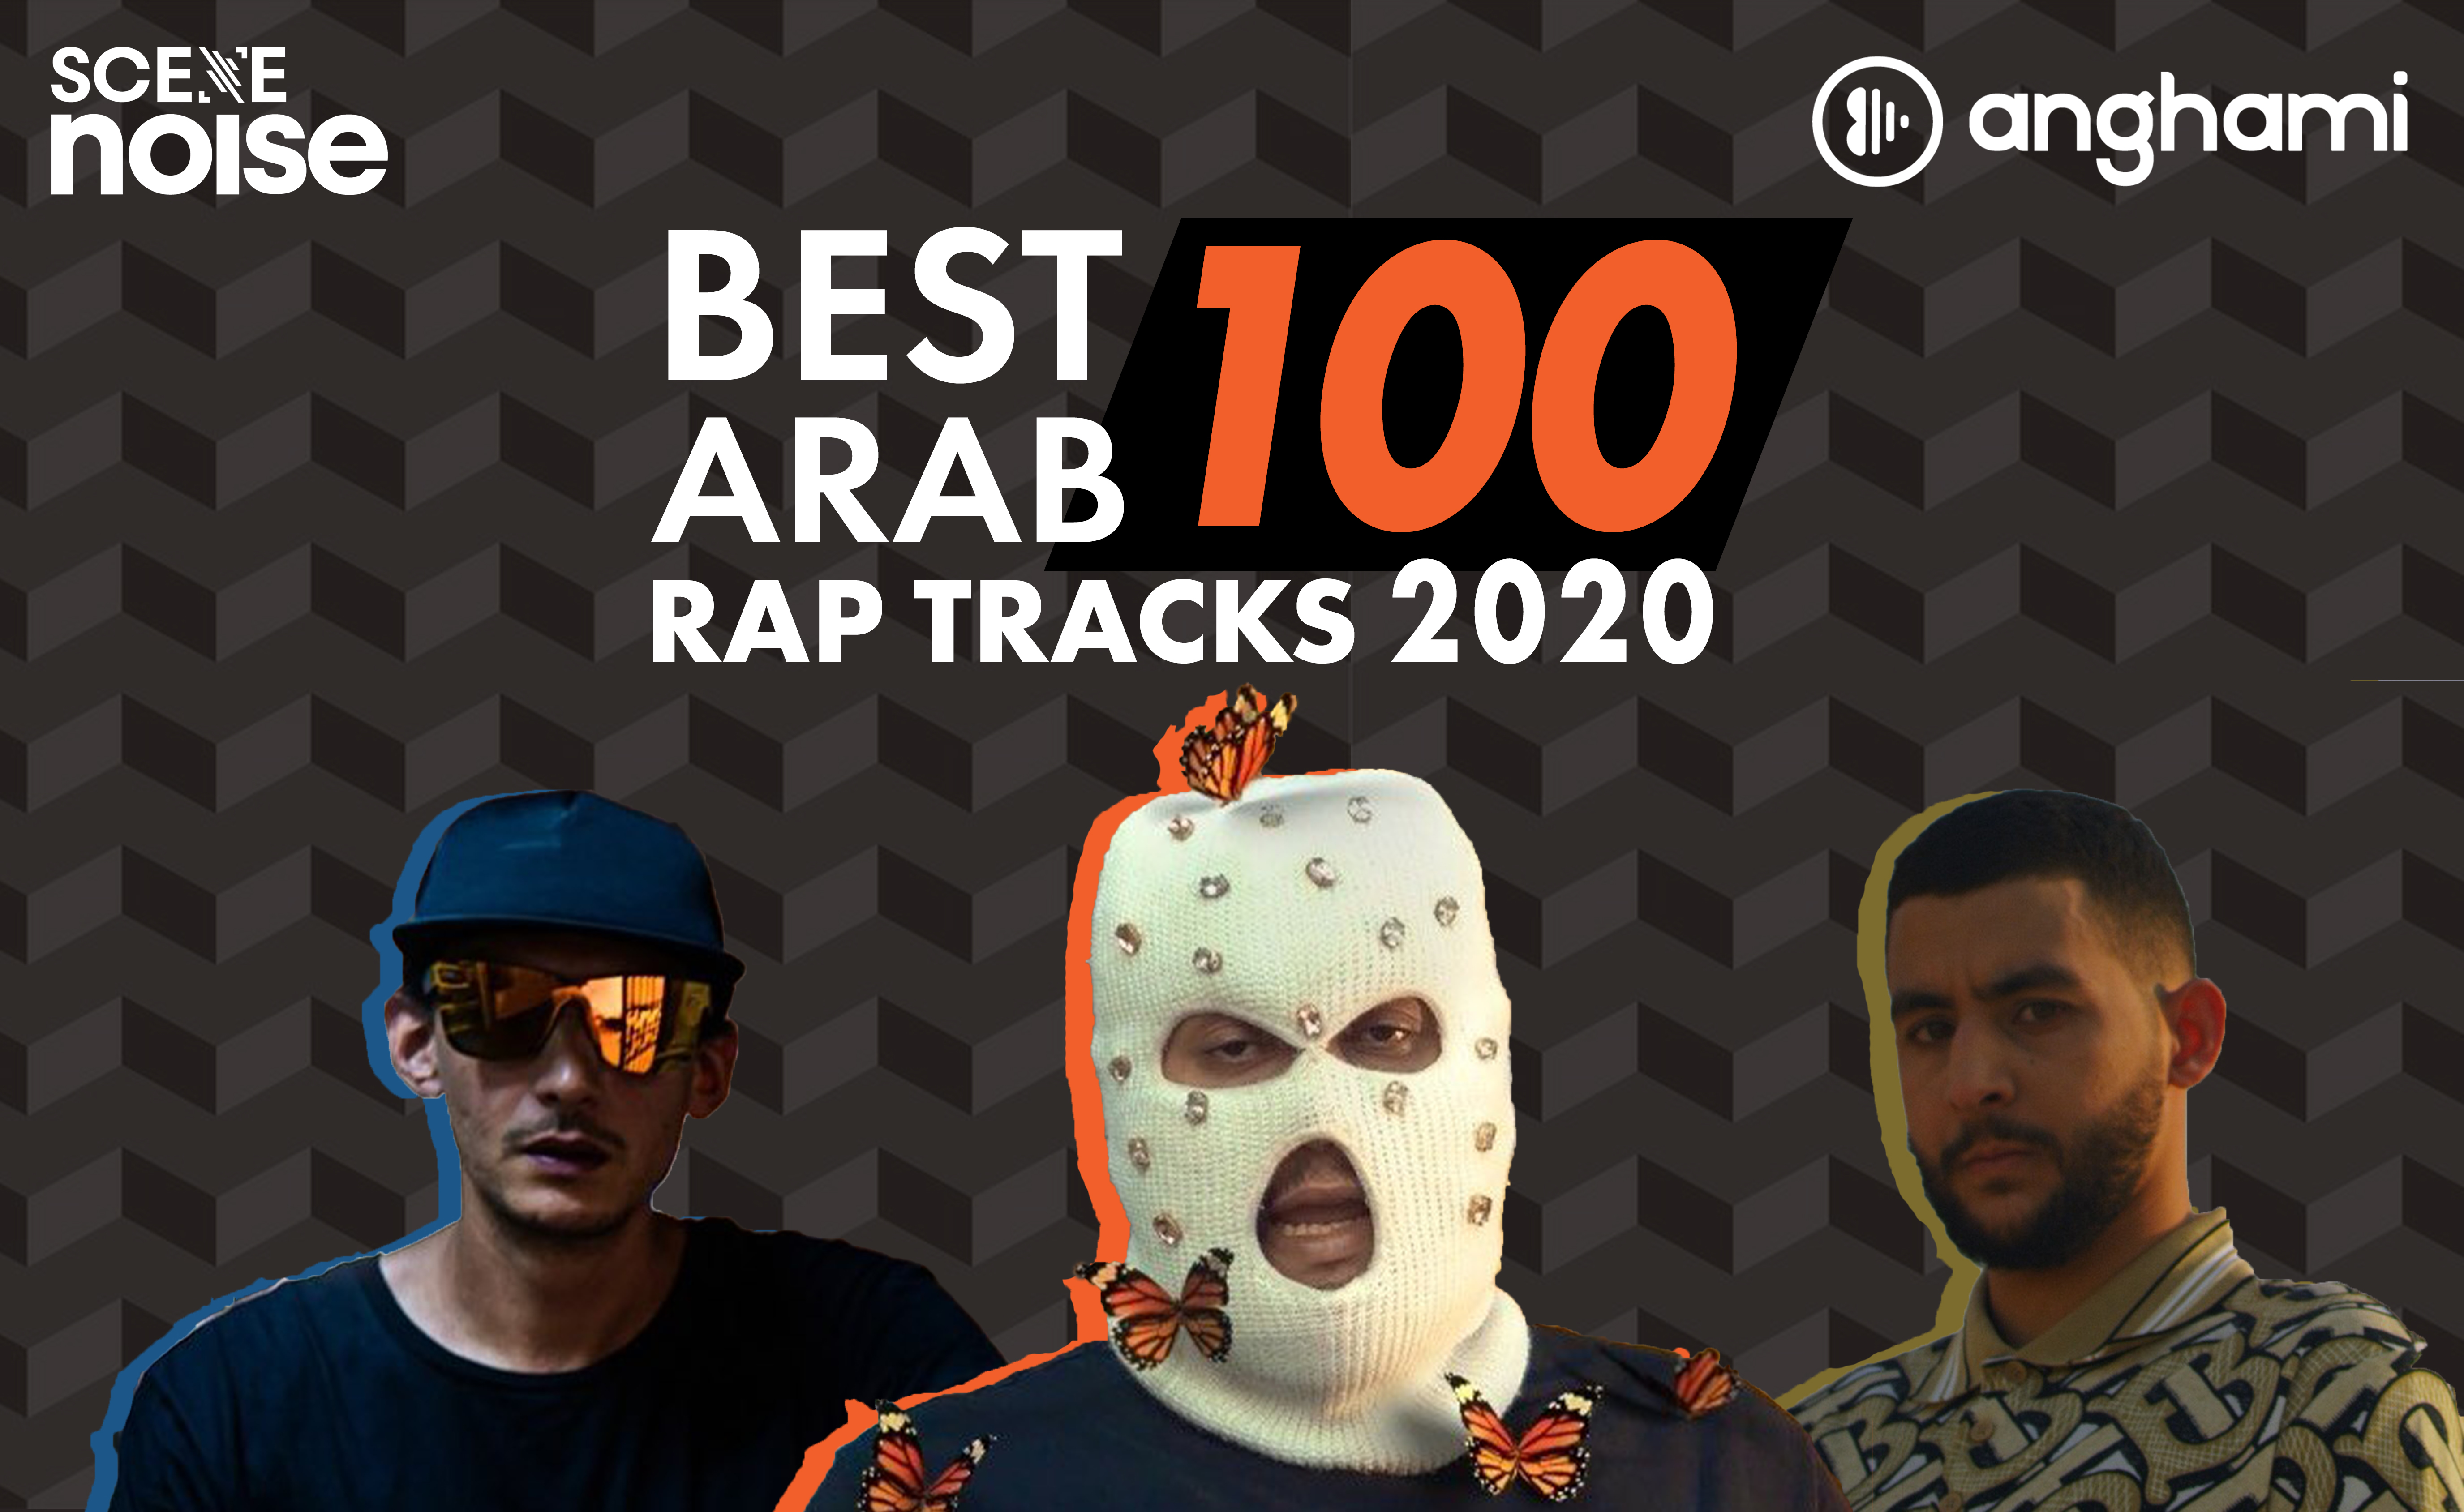 Best 100 Arab Rap Tracks of 2020